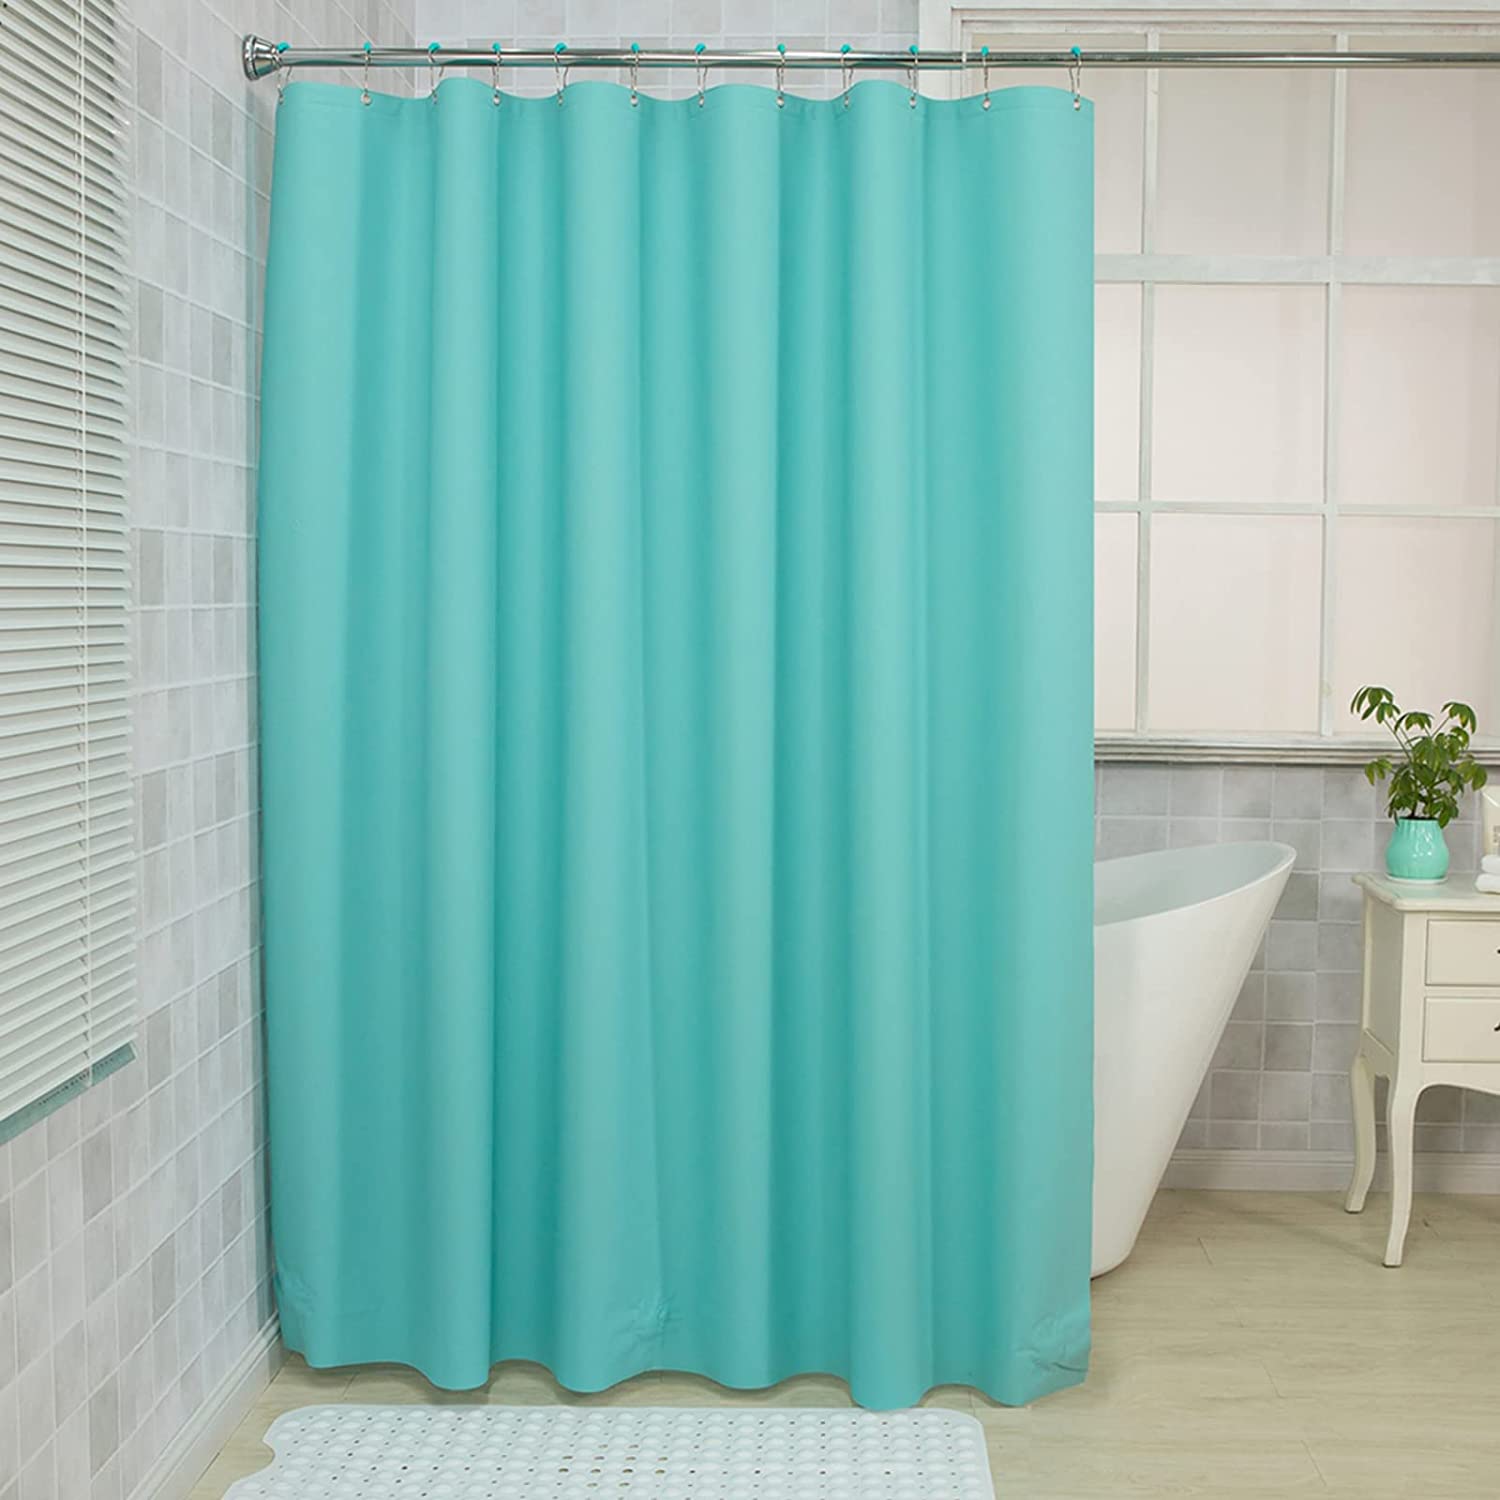 Waterline Polyester Bathroom Plain Shower Curtain Fabric Waterproof 12 Hooks Set 